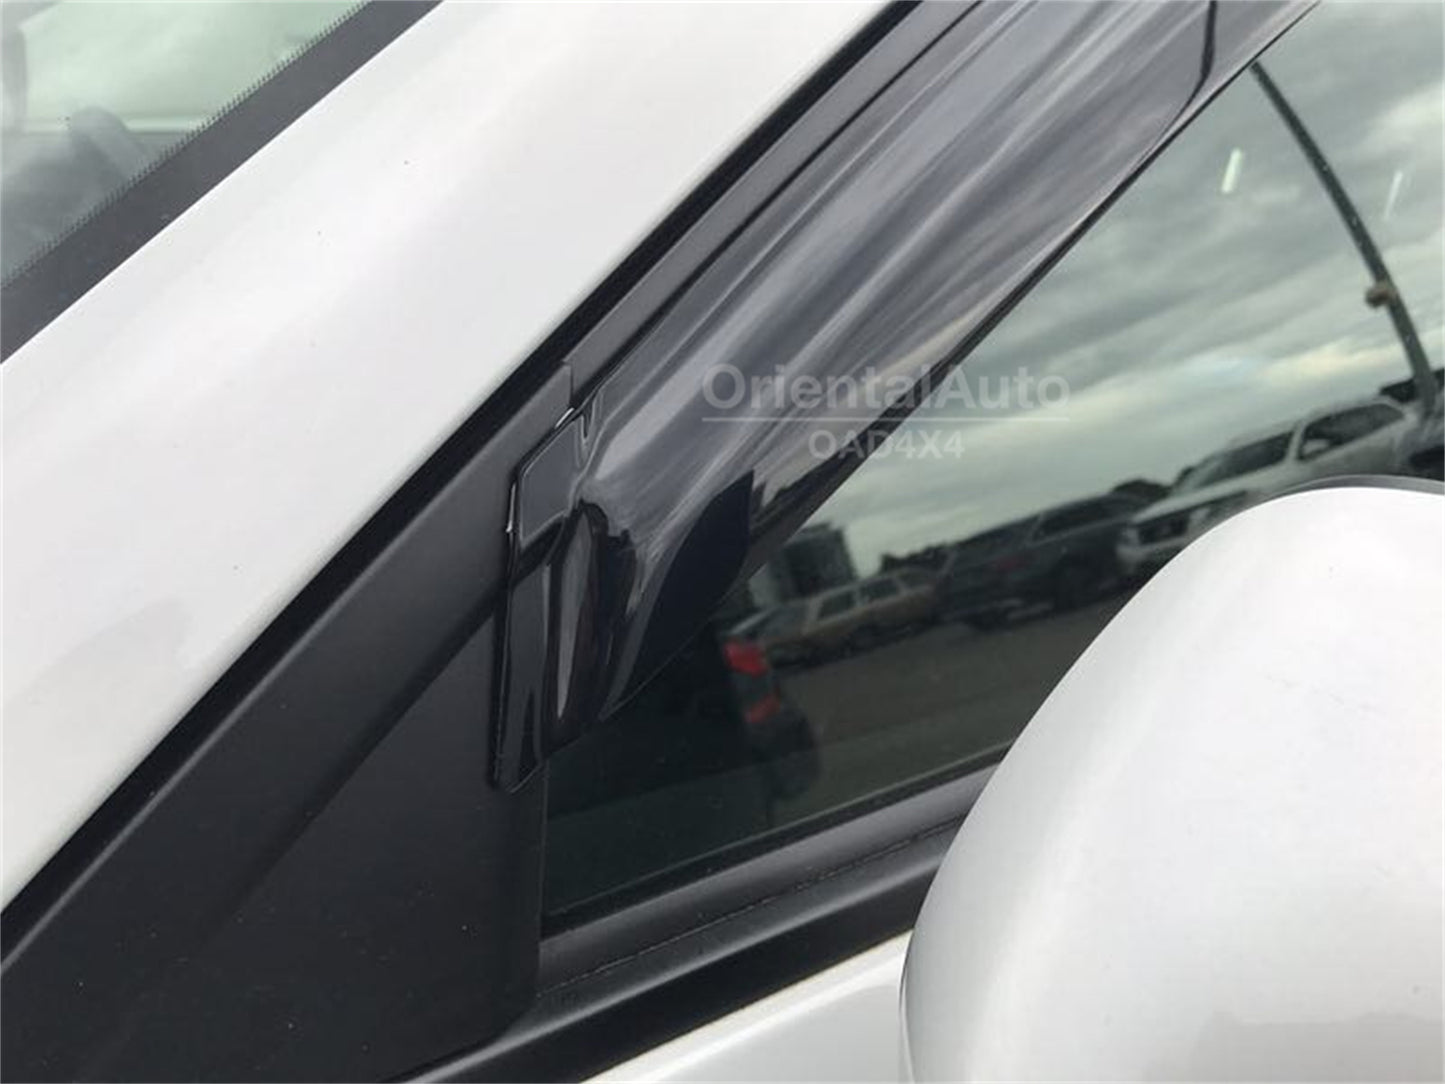 Luxury Weather Shields for Mazda CX3 2015+ Weathershields Window Visors